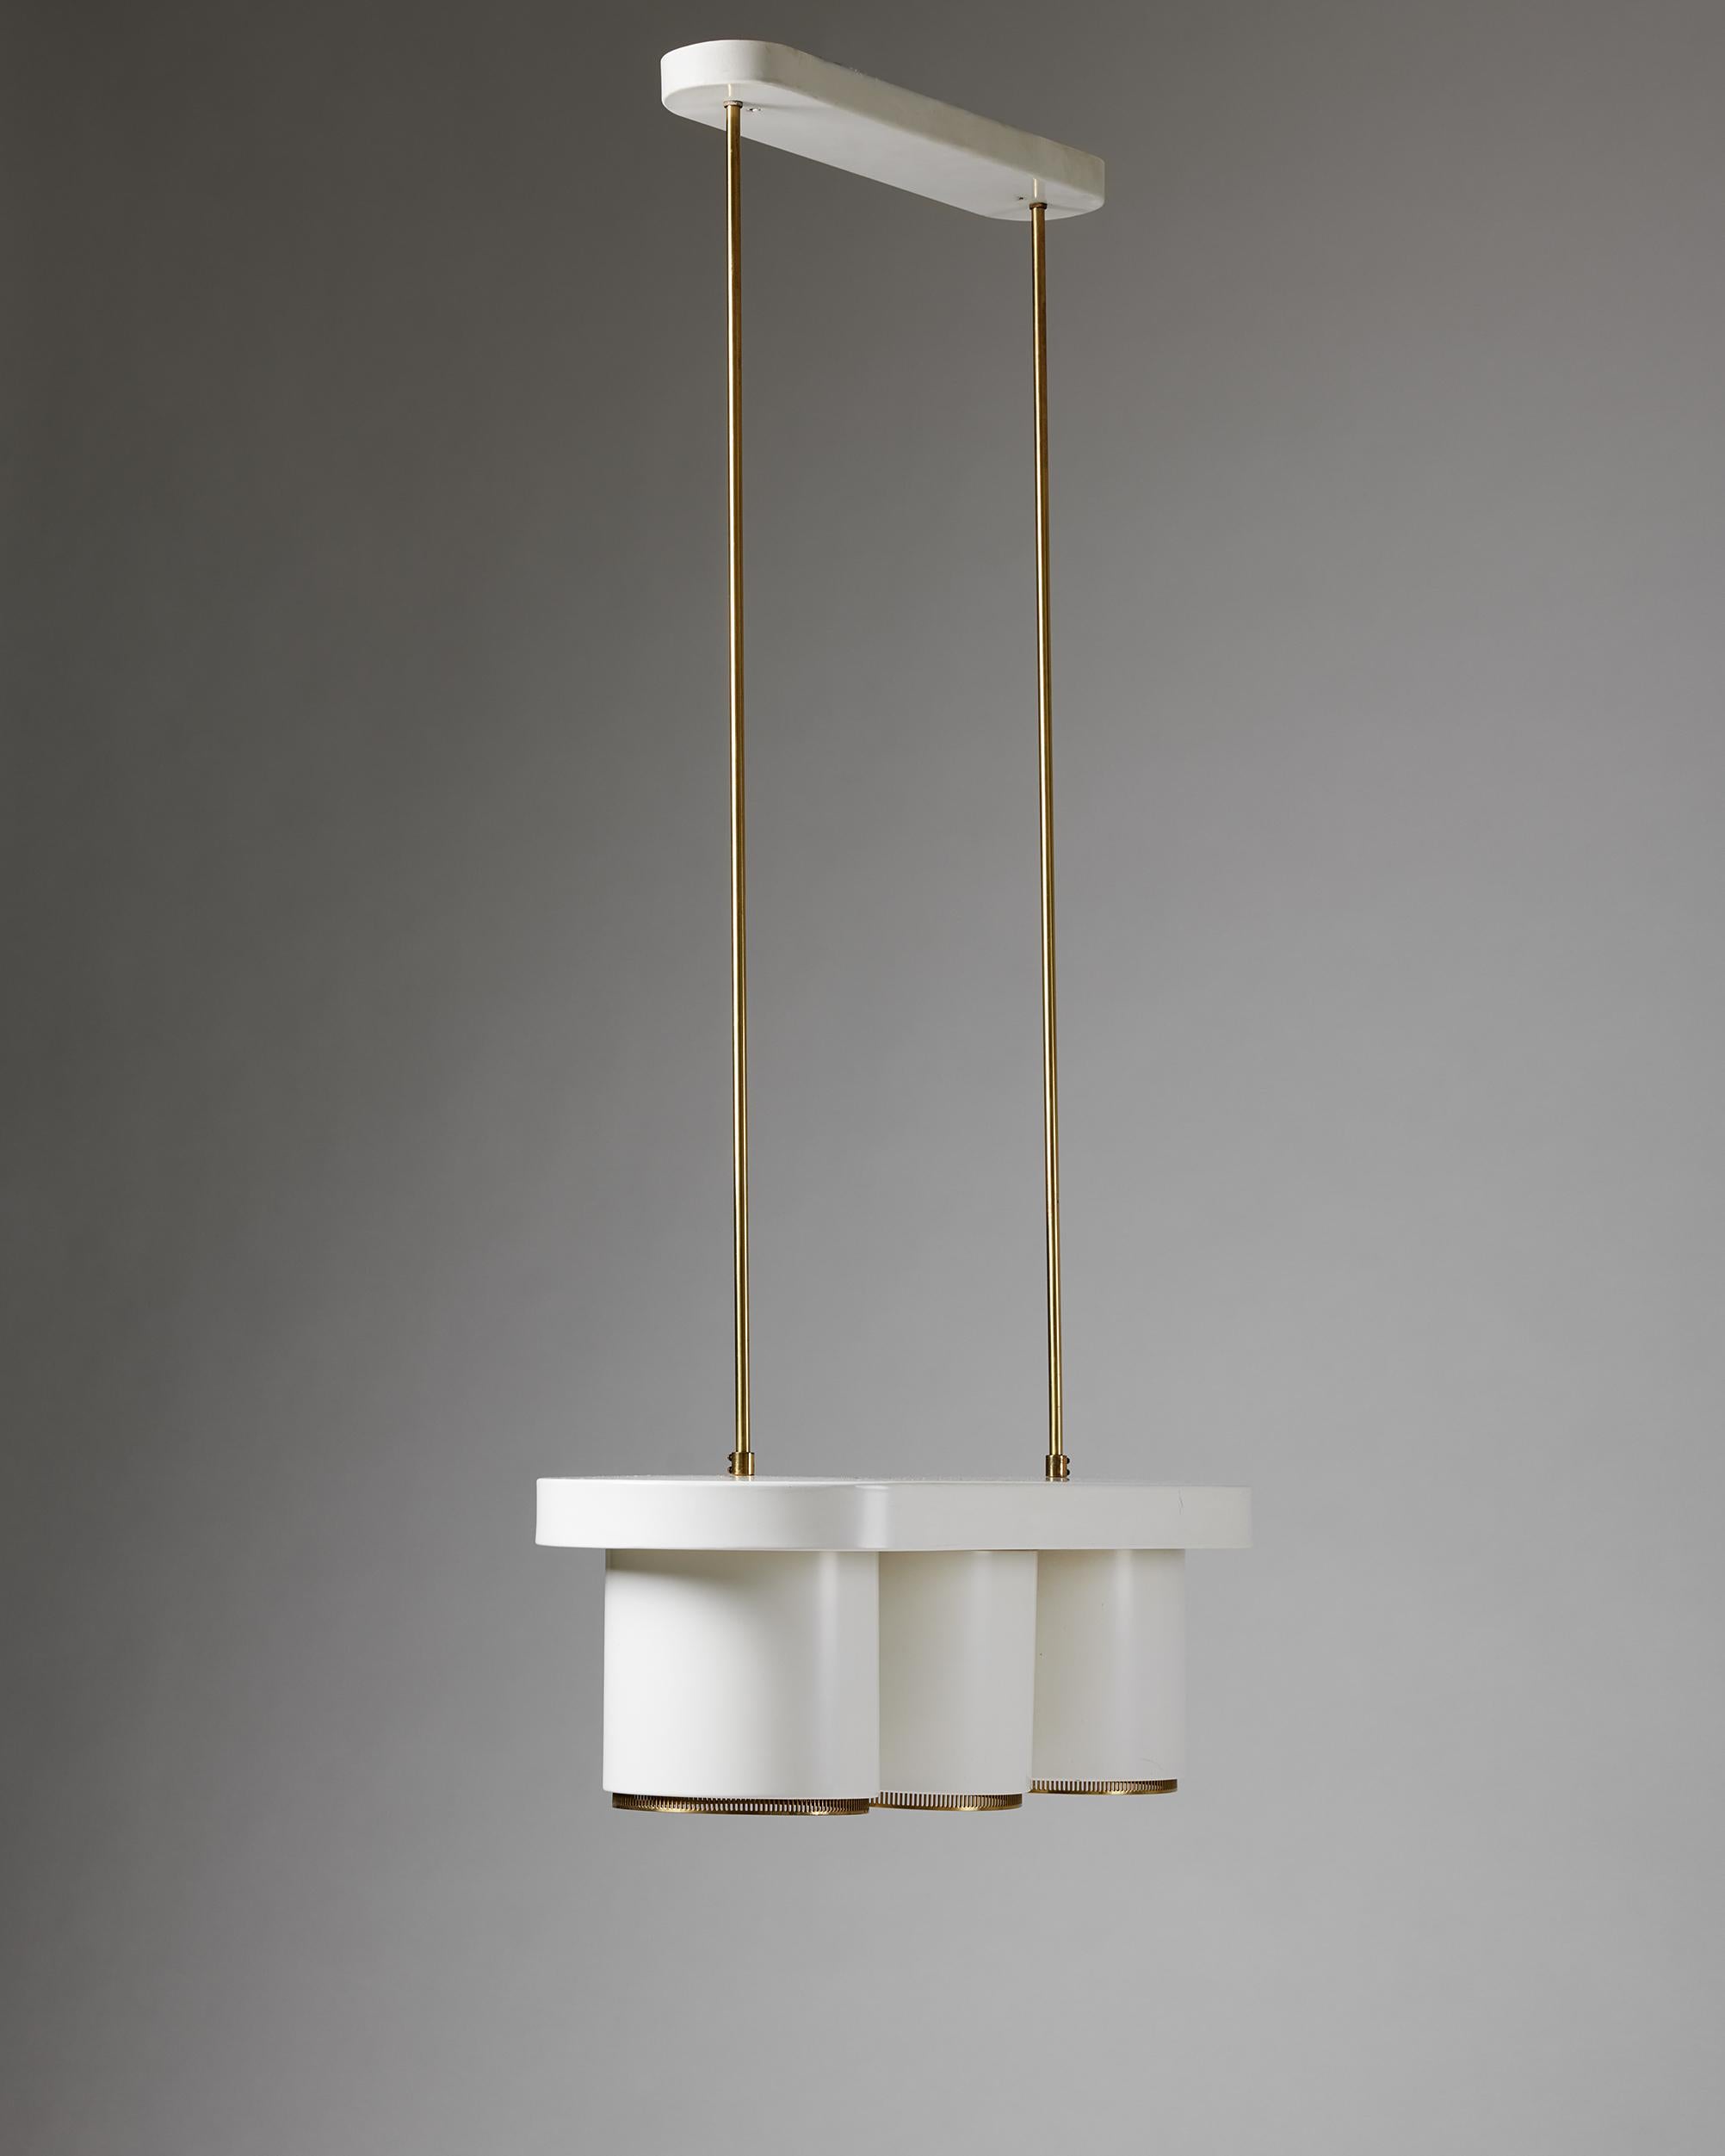 Ceiling lamp, model A203, designed by Alvar Aalto for Valaistustyö, Finland For Sale 8